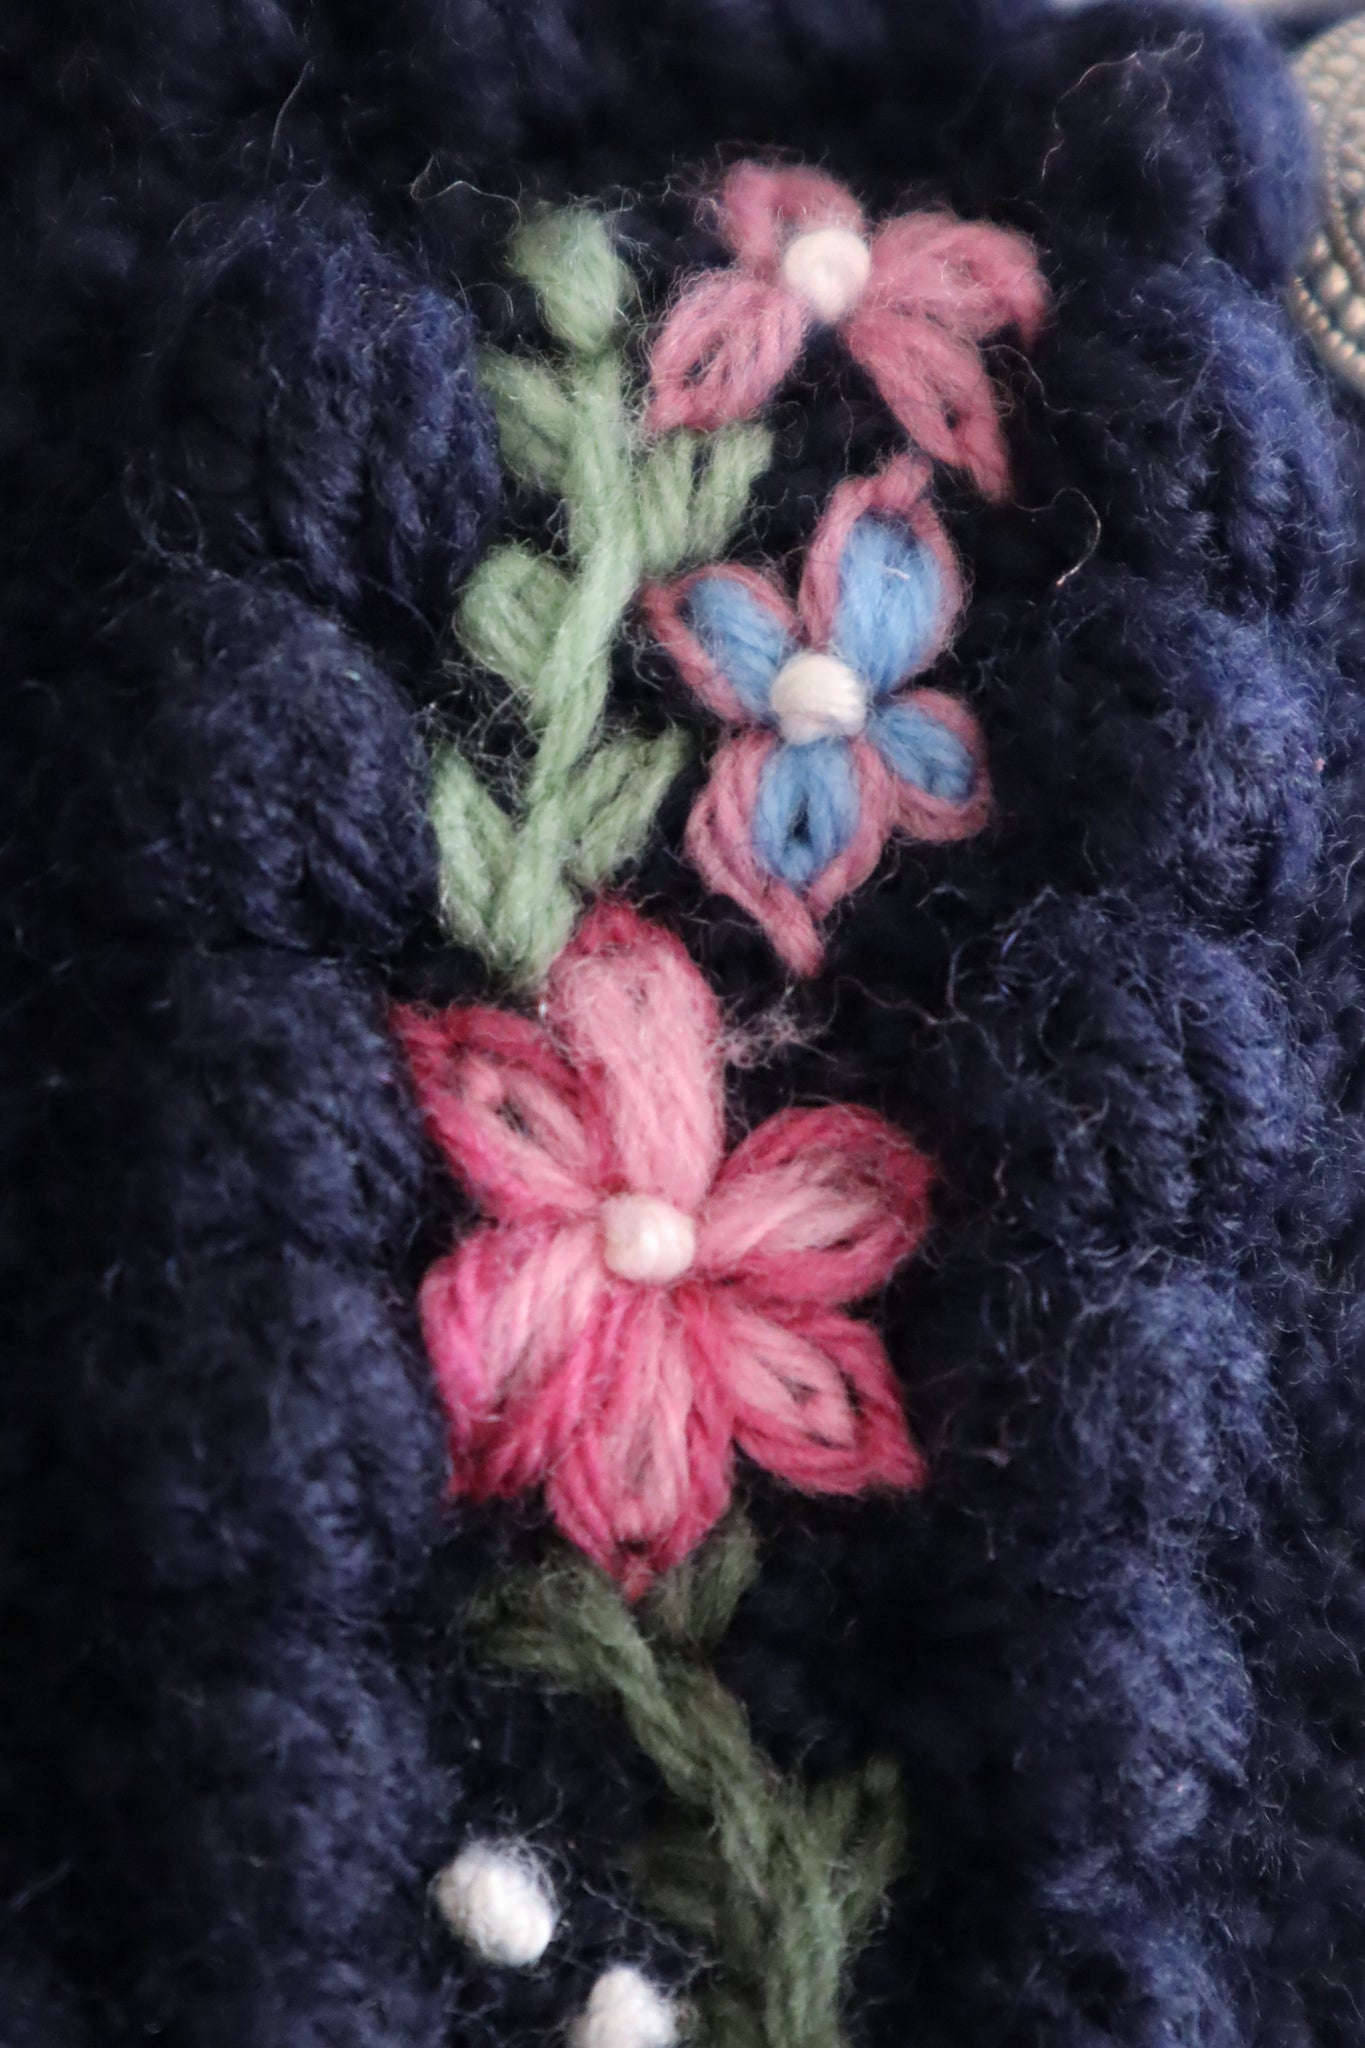 80s Hand-knit Bavarian Flower Embroidered Popcorn Knit Folklore Cardigan Navy